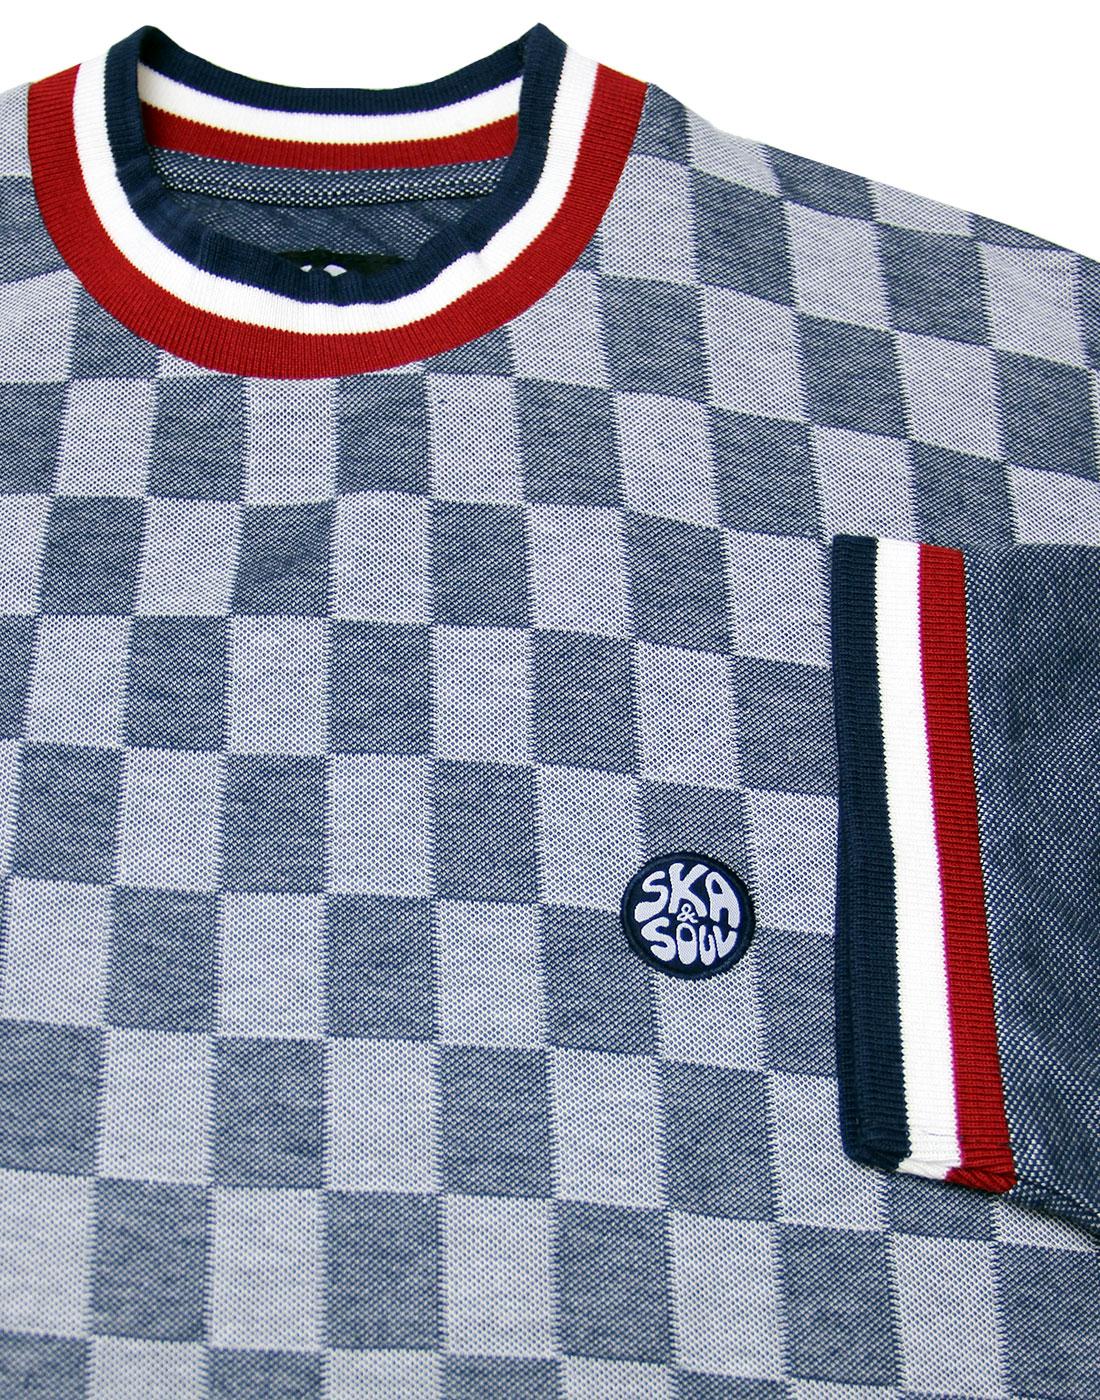 Ska & Soul 2184 navy chequer-board front oxford pique T-Shirt size medium-4XL 